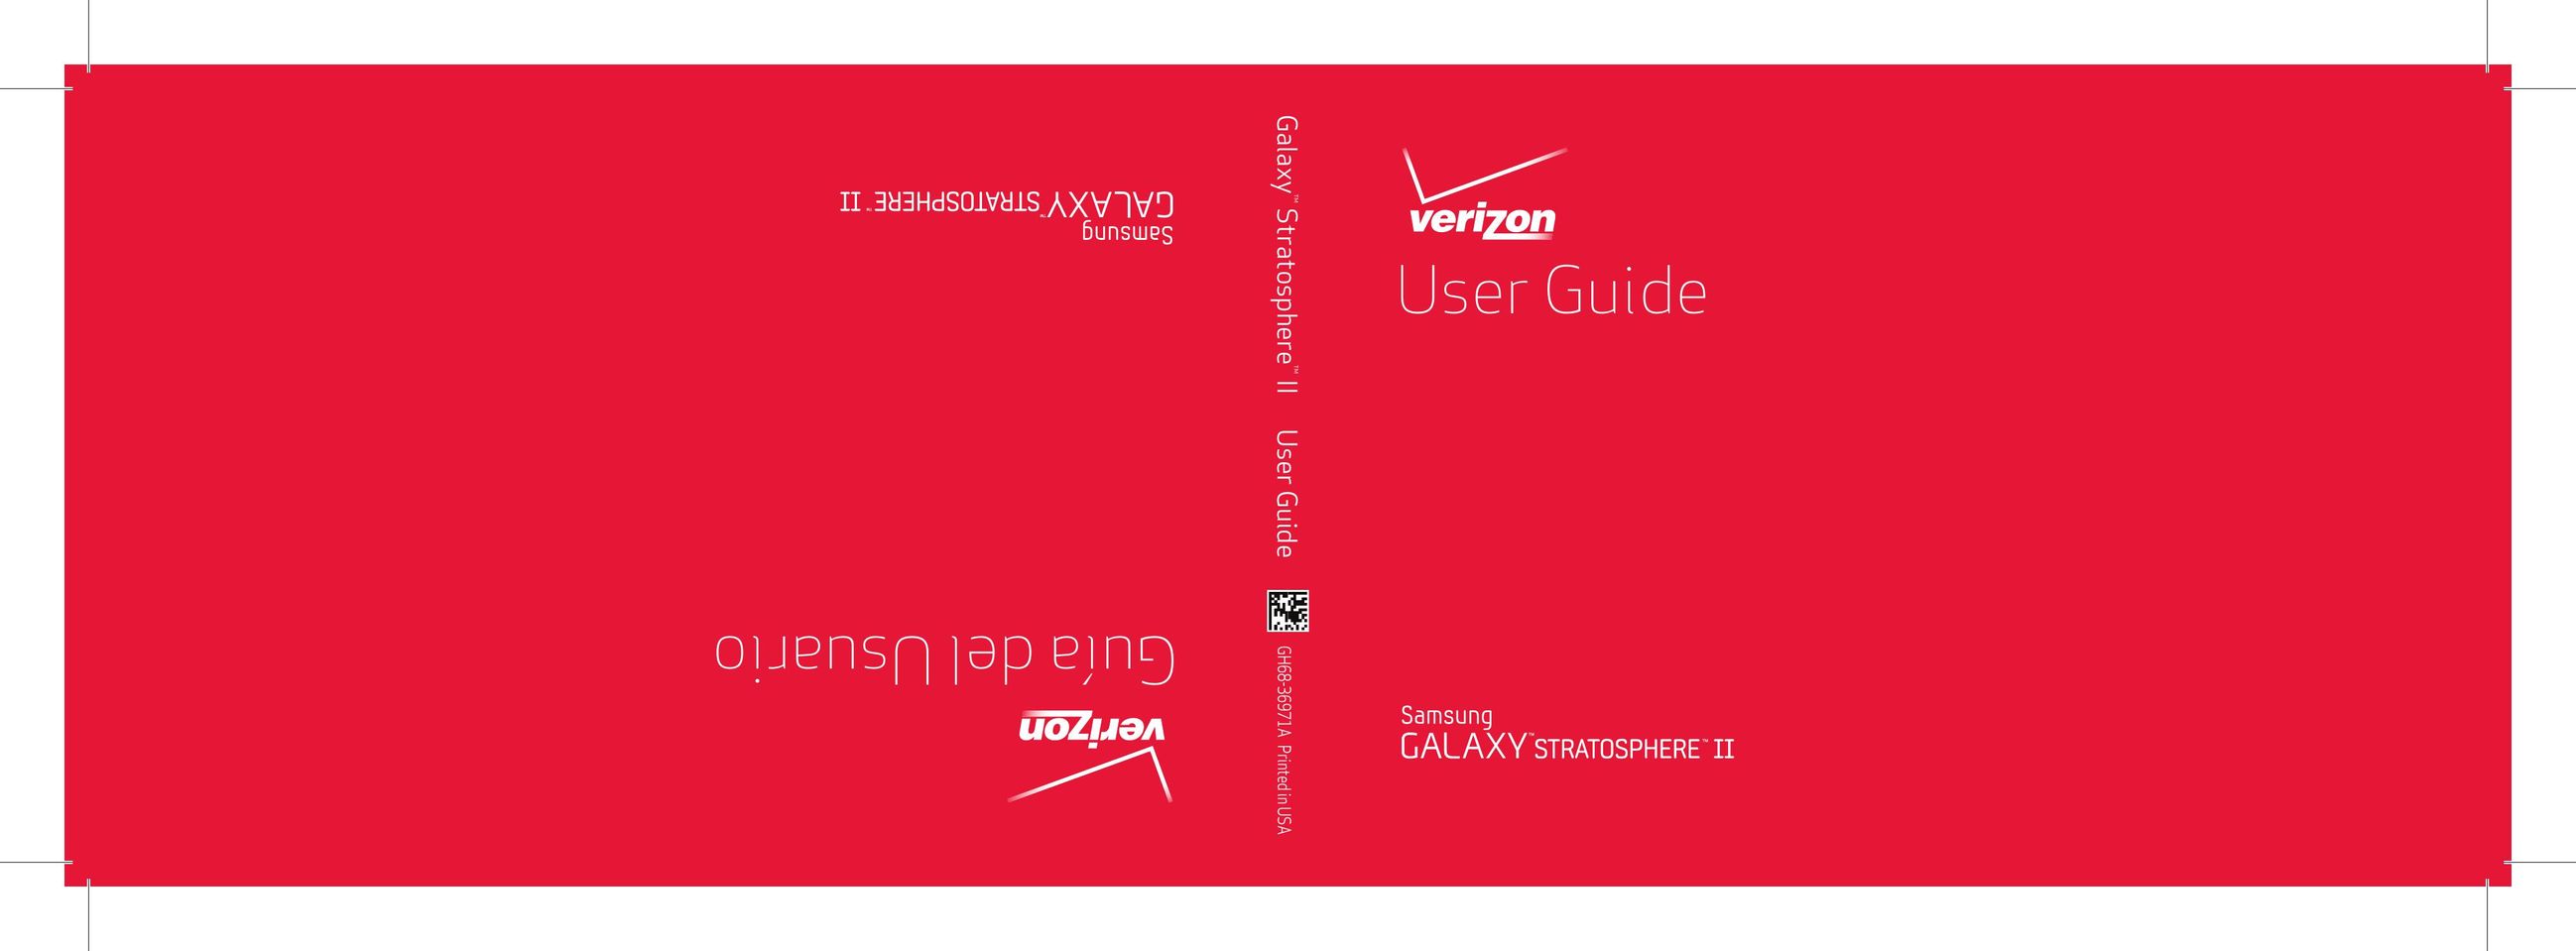 Verizon GH68-36971A Cell Phone User Manual